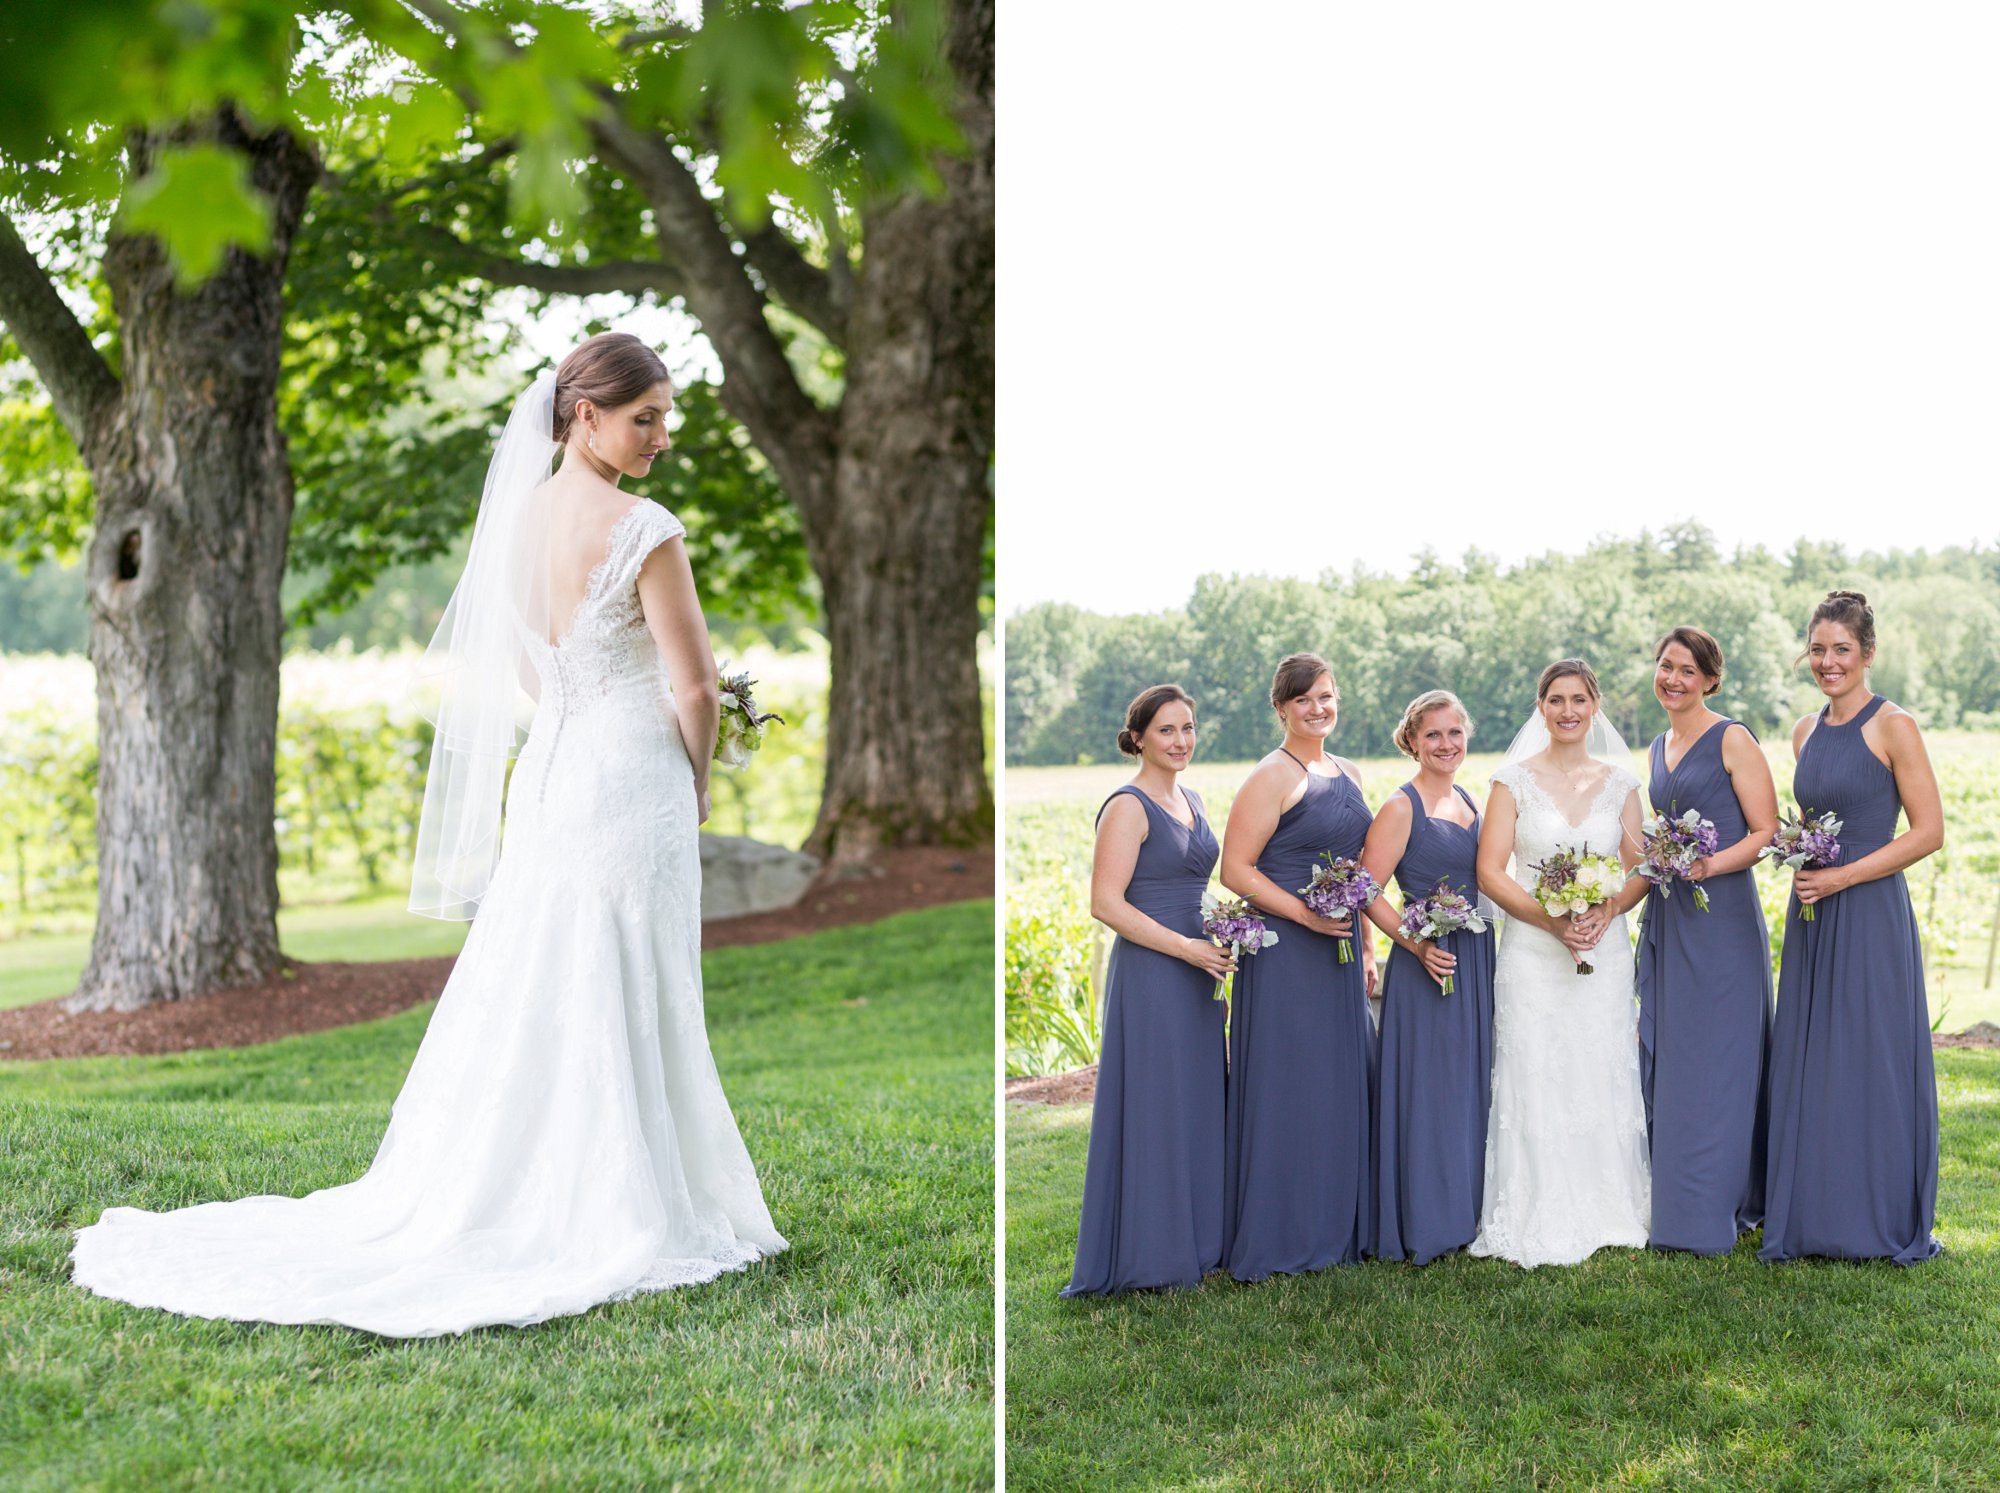 Bridesmaid portraits at Flag Hill Winery, Lee NH | New Hampshire Wedding Photographer